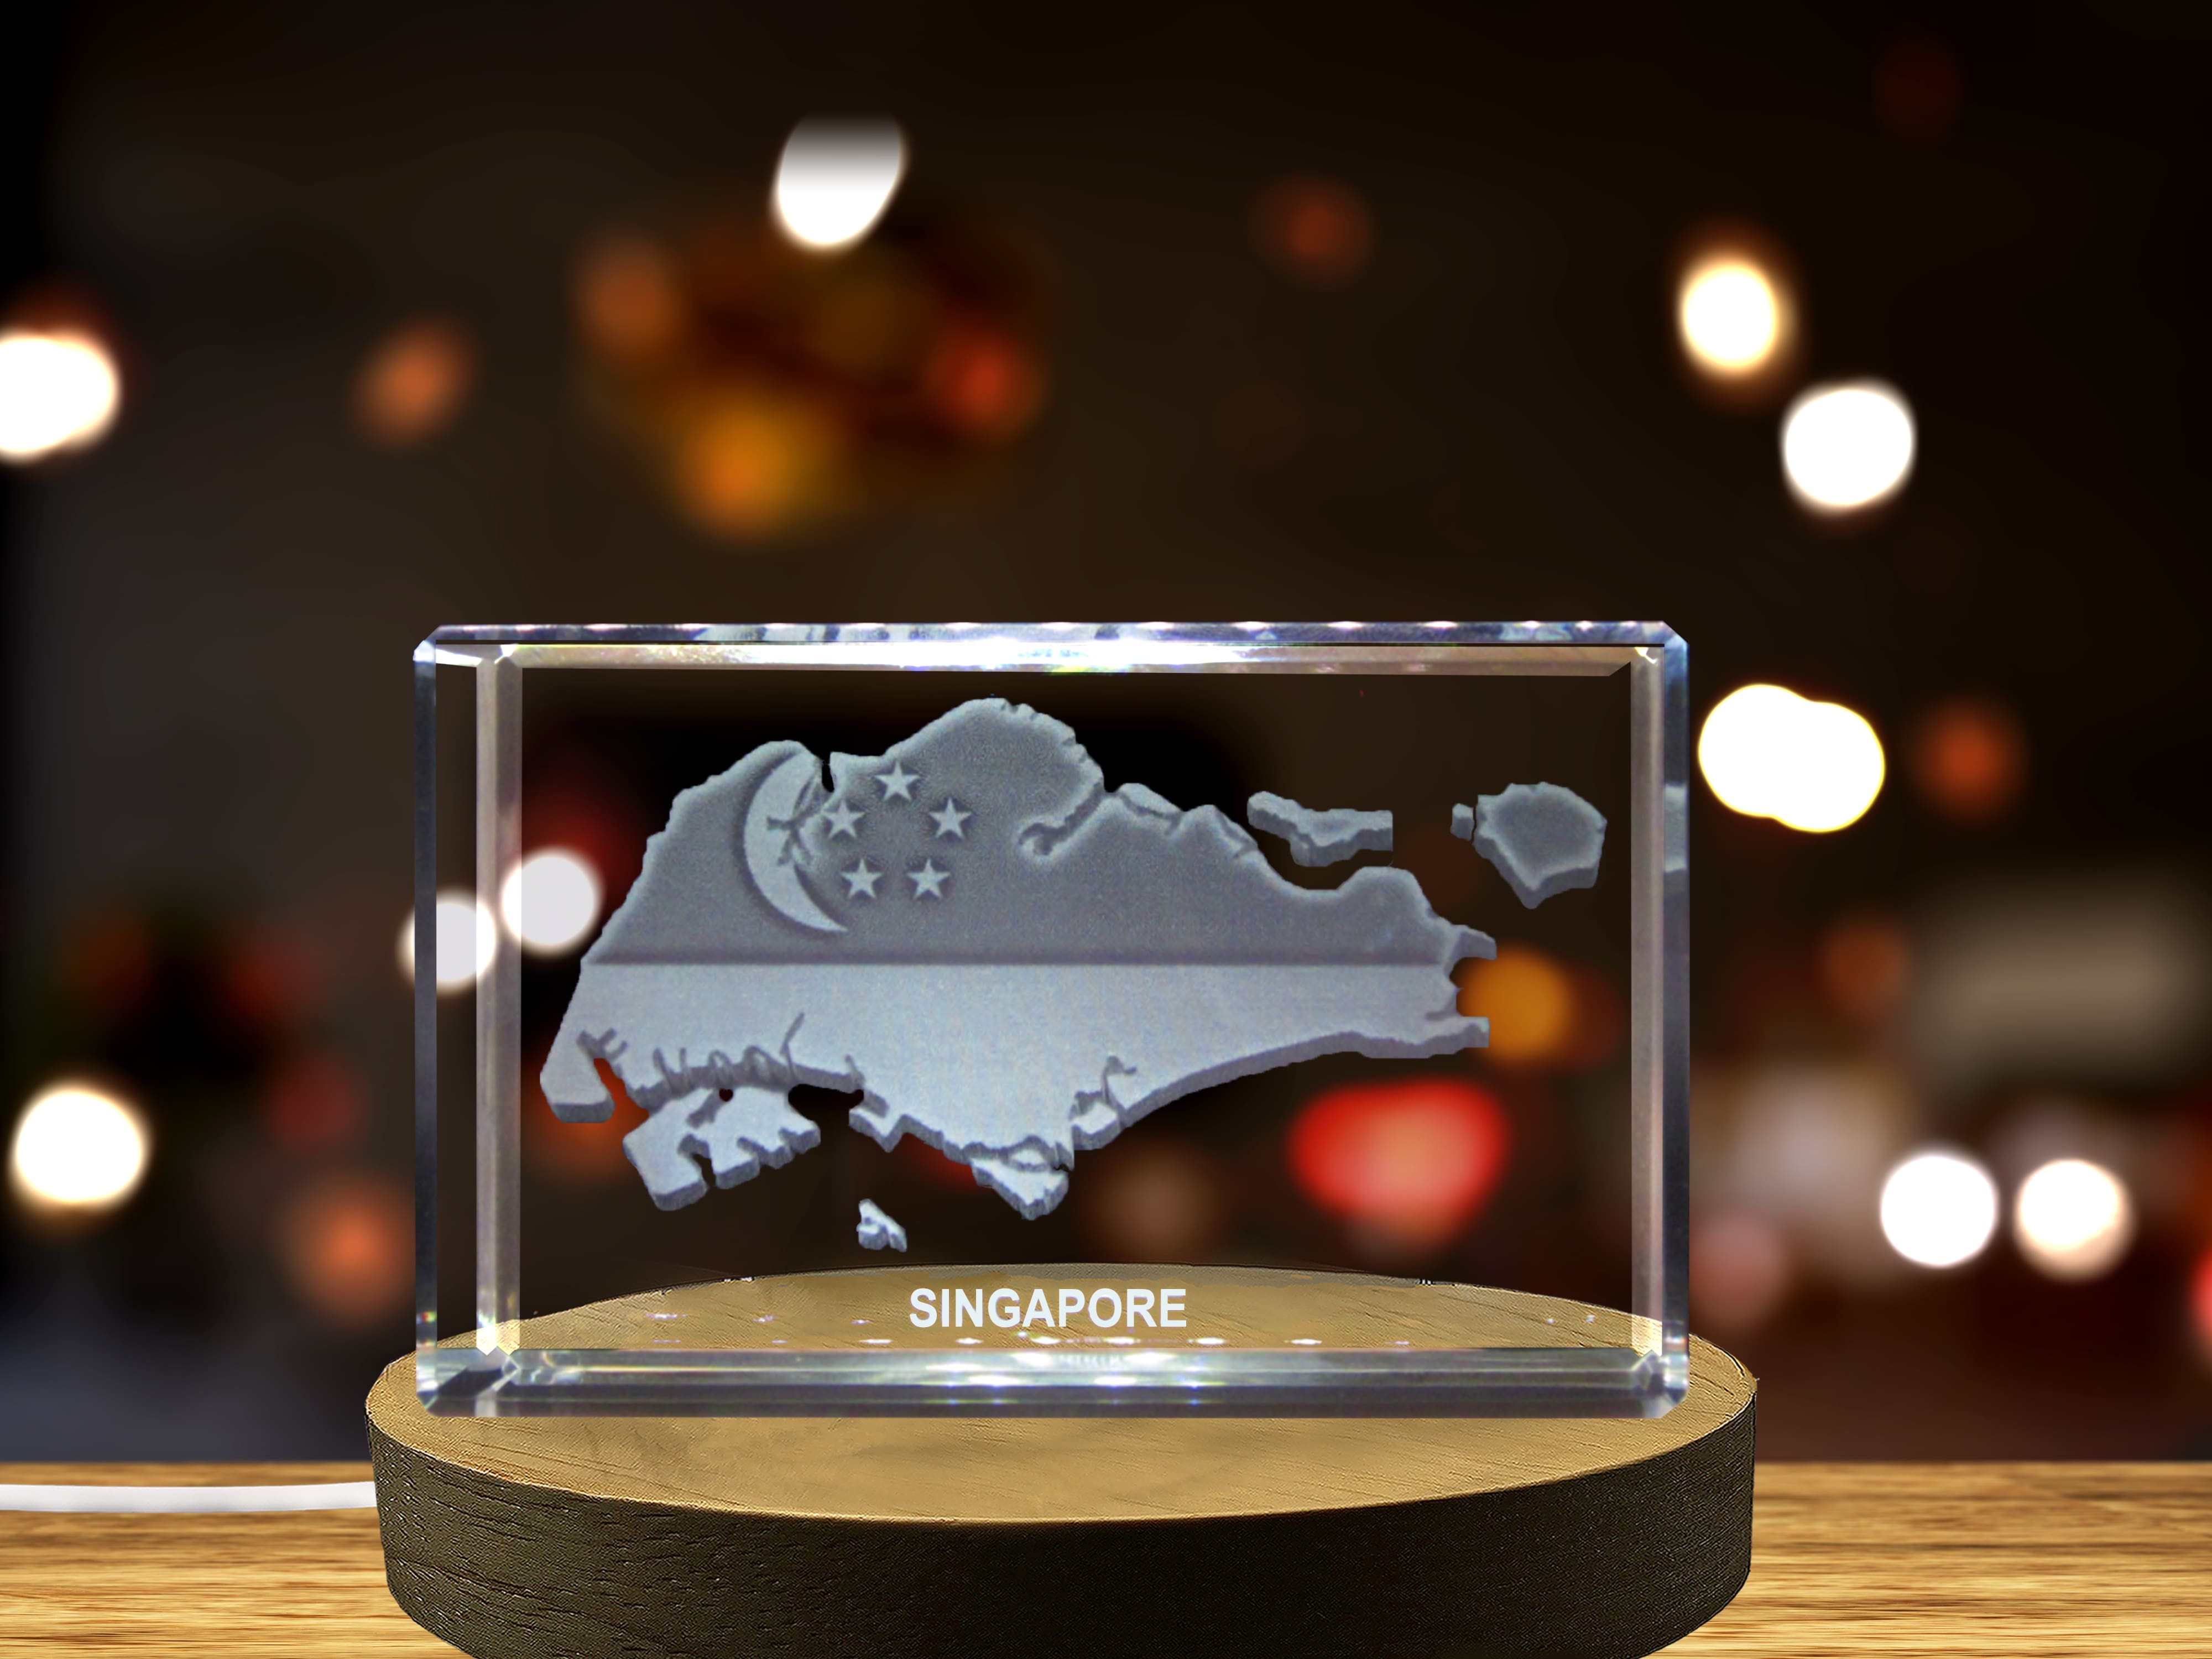 Singapore 3D Engraved Crystal 3D Engraved Crystal Keepsake/Gift/Decor/Collectible/Souvenir A&B Crystal Collection